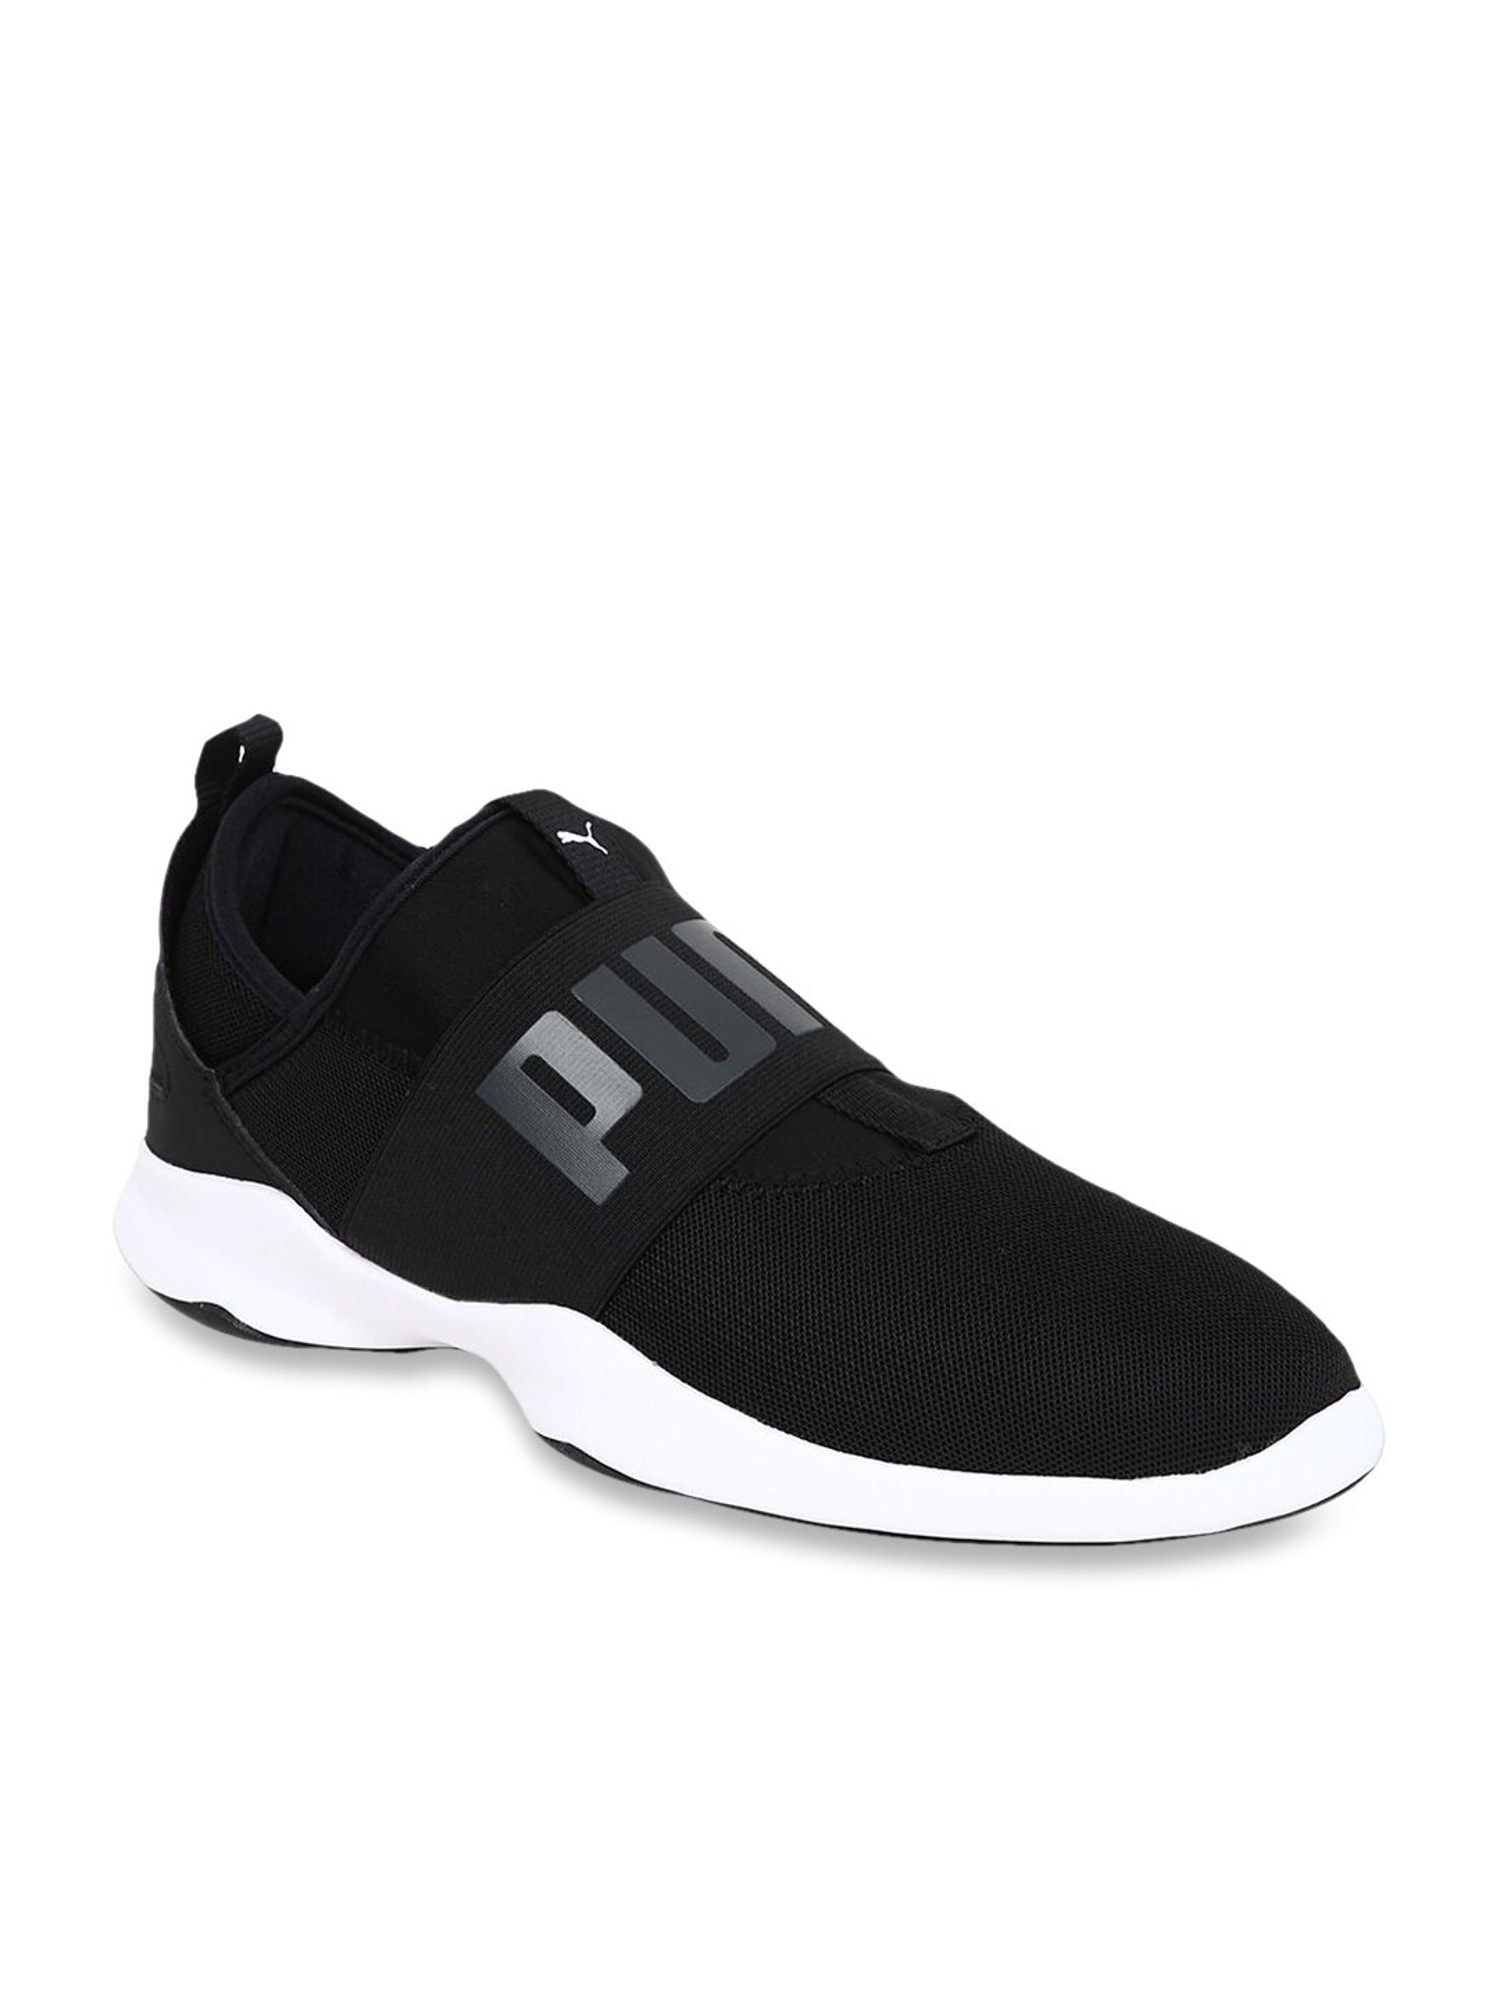 LAST 1 ⭐️ Puma dare sneakers asphalt gray | Sneakers, Shoes, Bold fashion